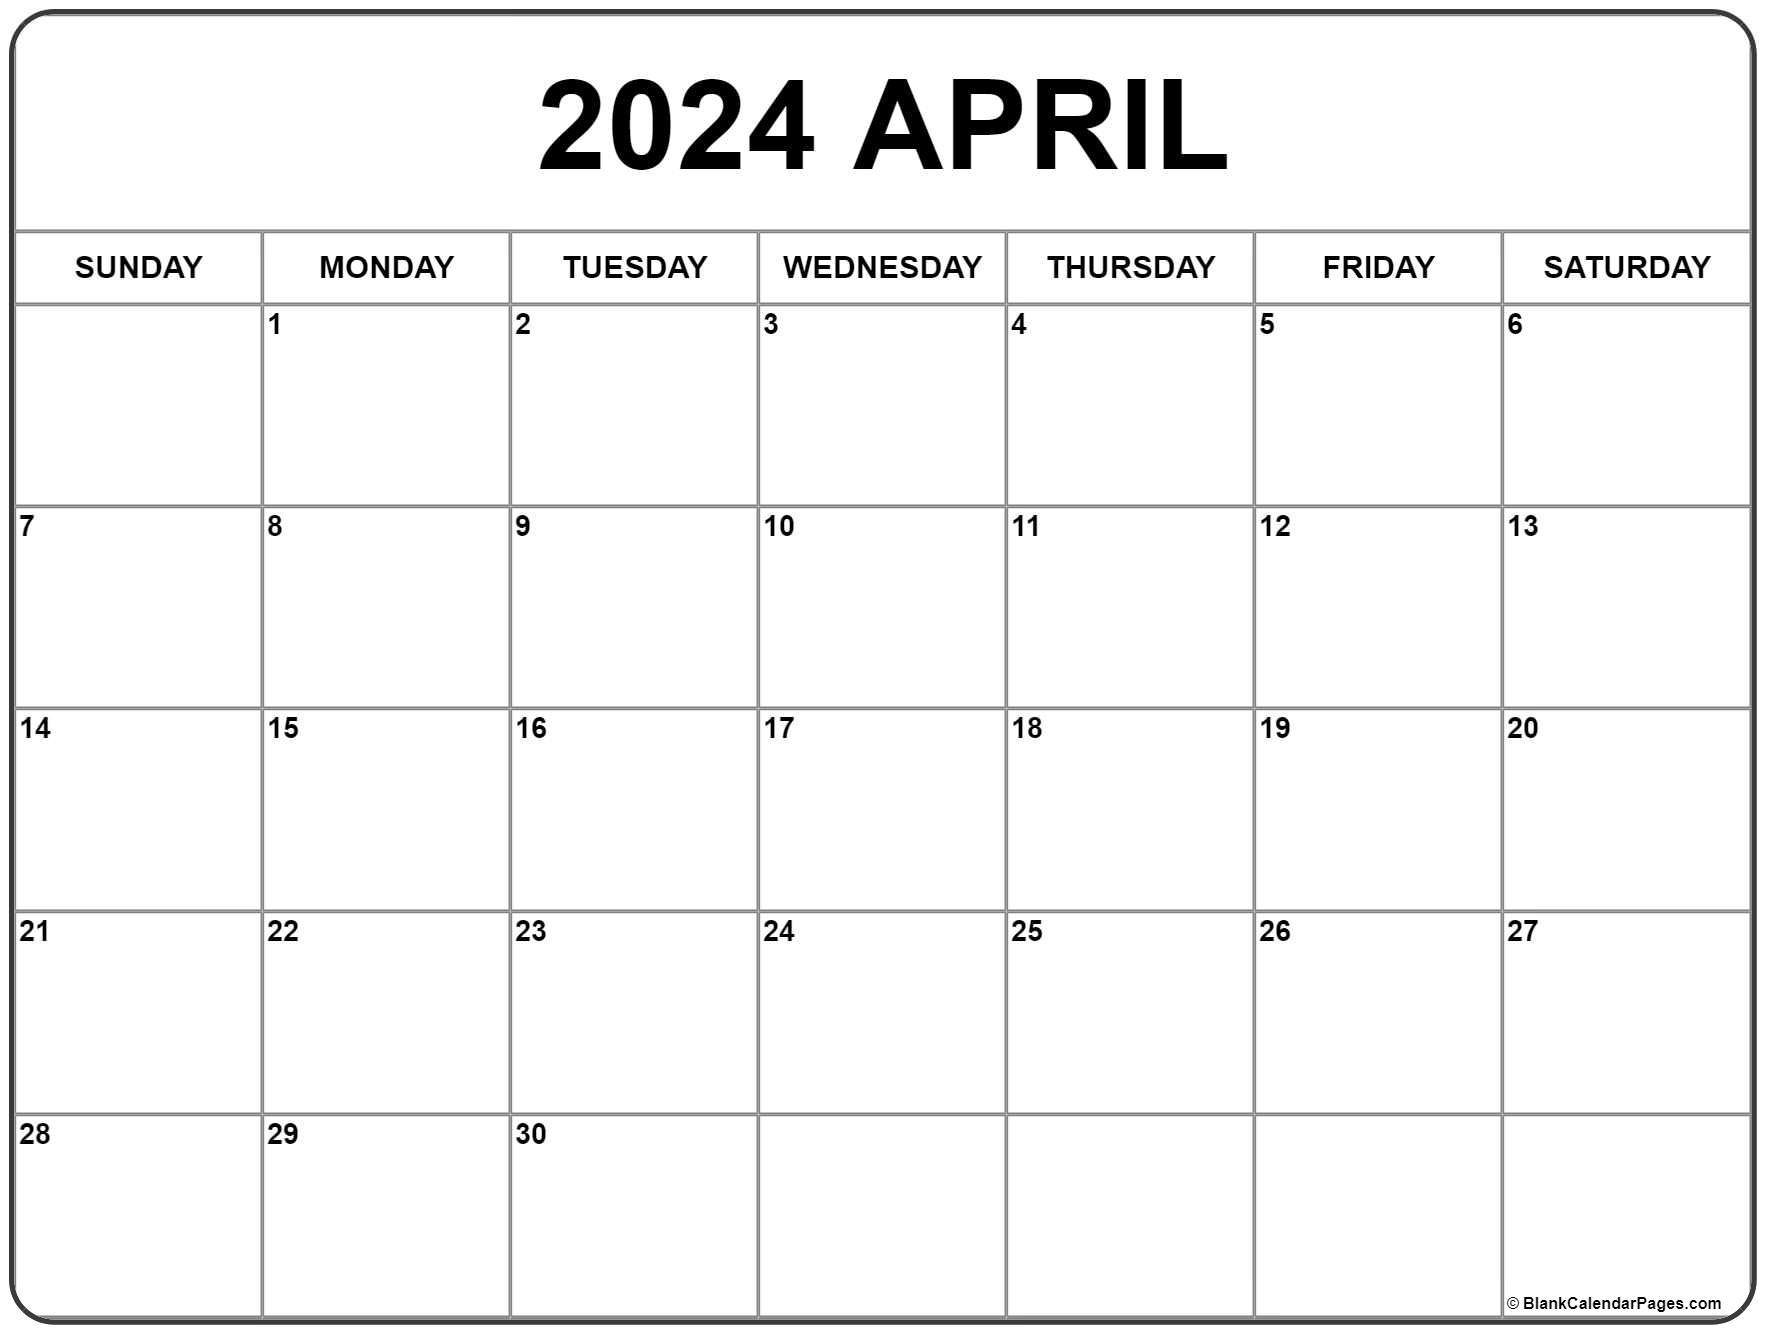 Print A Calendar April 2022 April 2022 Calendar | Free Printable Calendar Templates